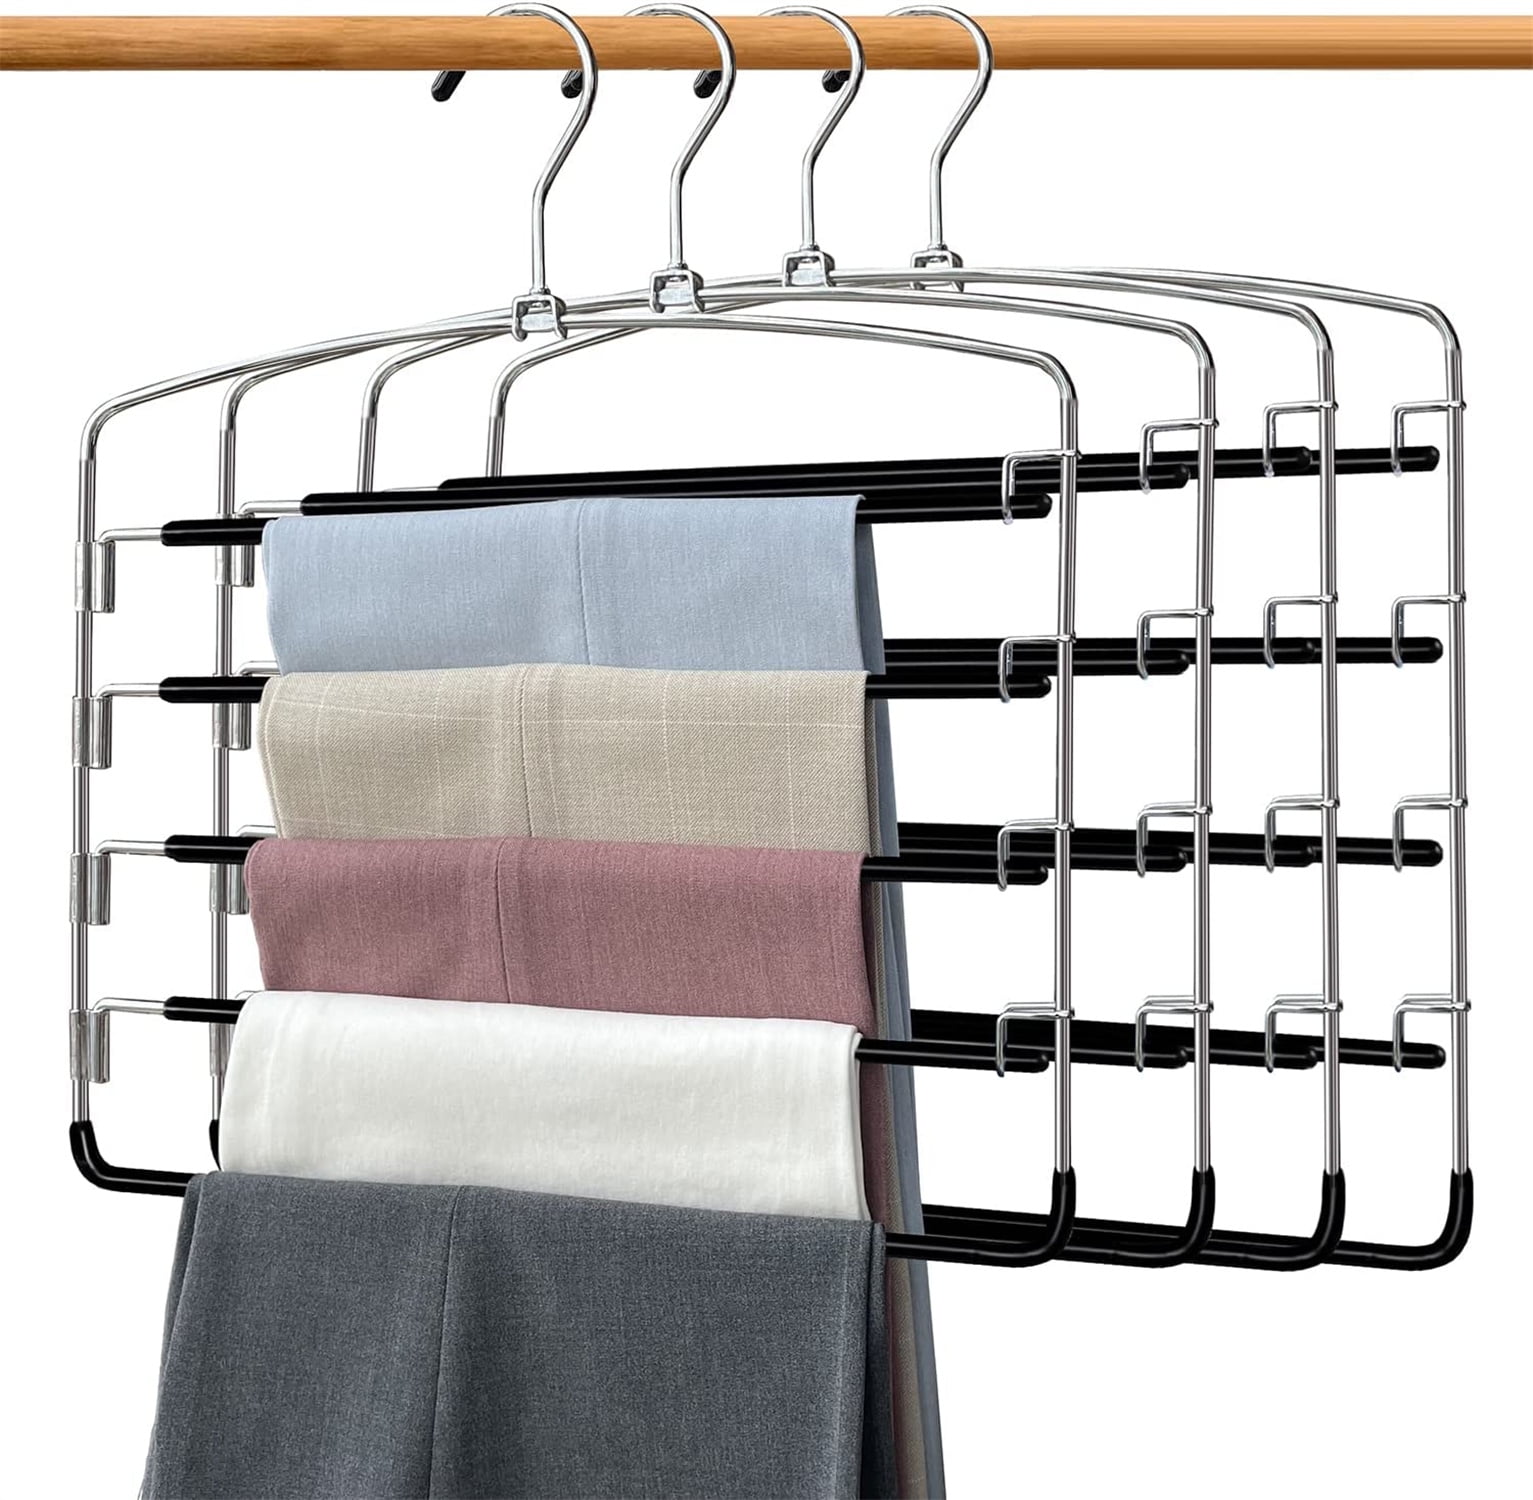 Upgrade] Pant Organizer for Closet (2 PK) Multi-Functional Pants